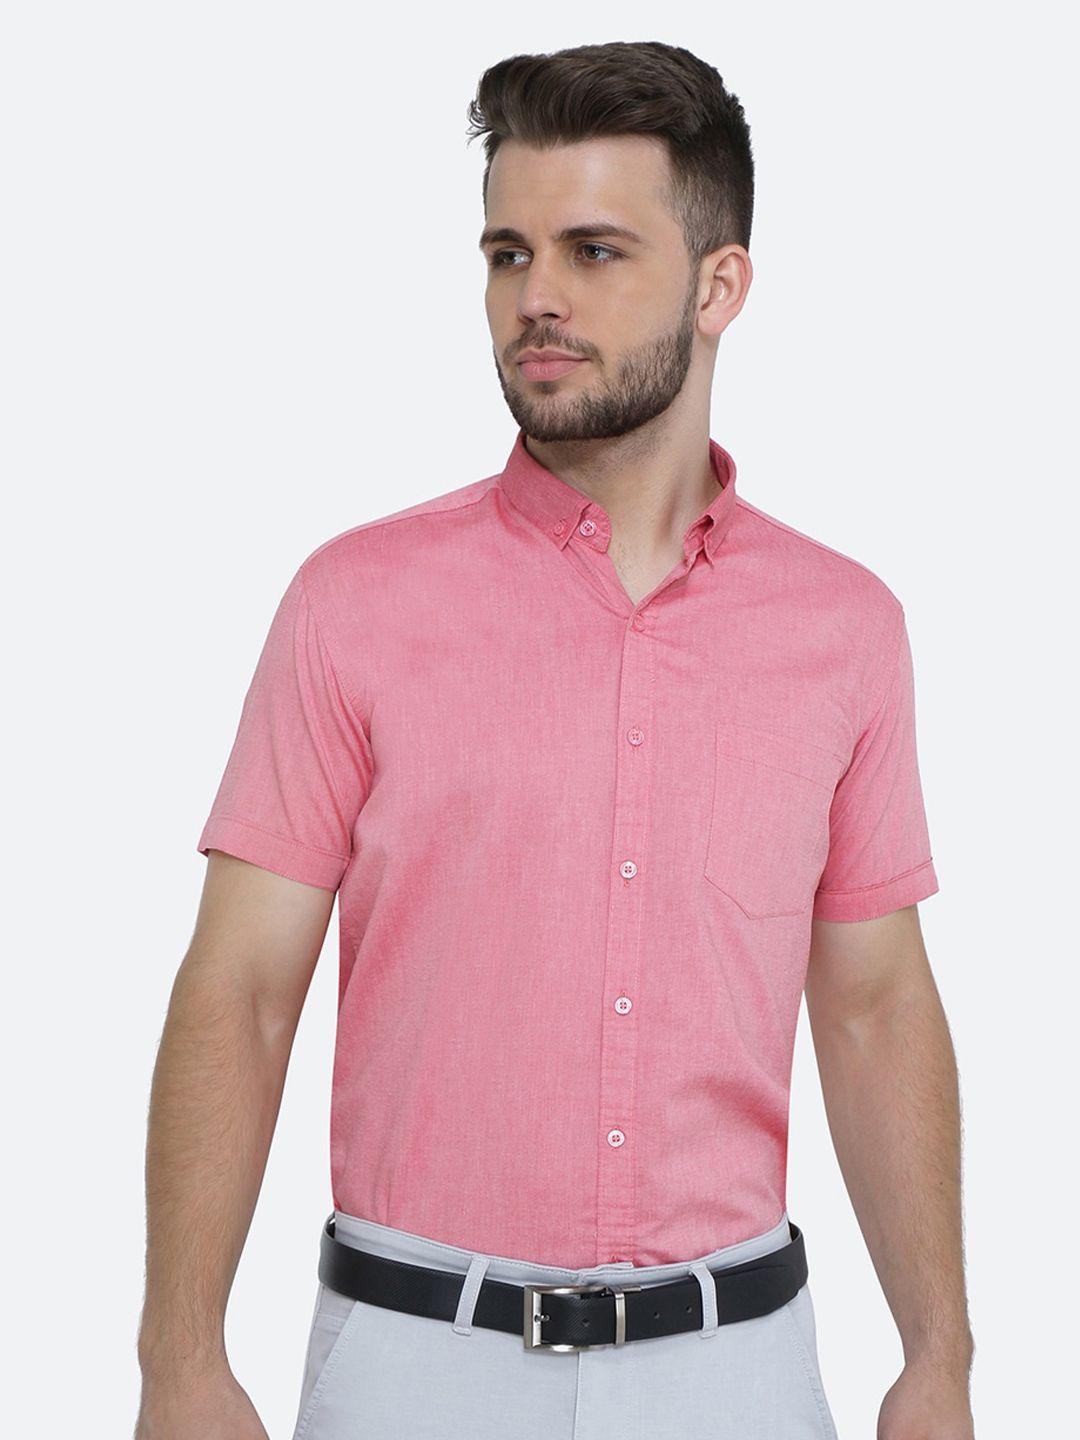 kuons-avenue-smart-slim-fit-button-down-collar-oxford-weave-cotton-formal-shirt